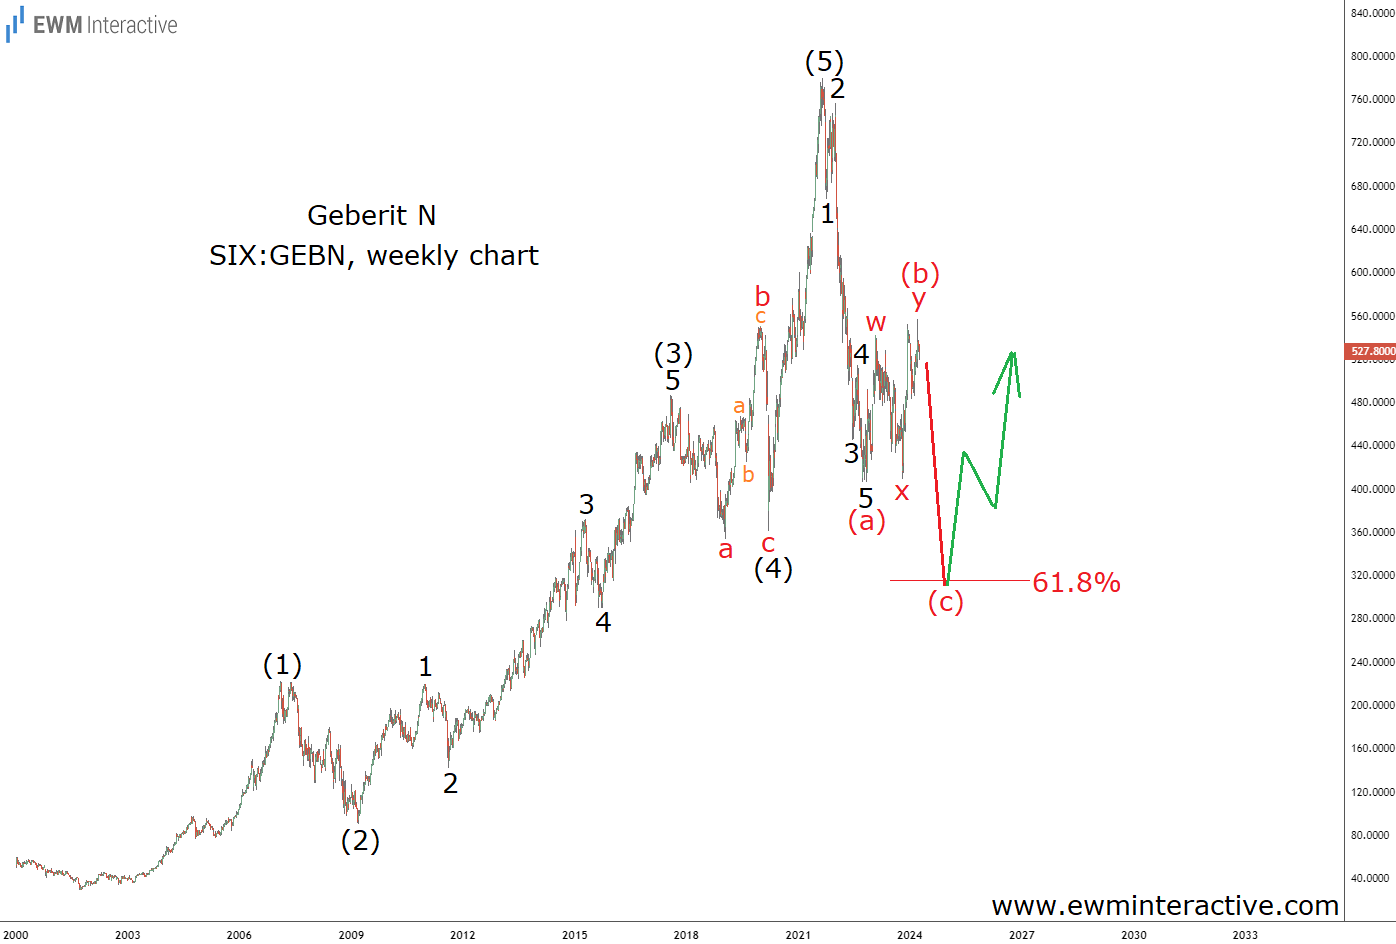 Geberit Stock Remains Under Elliott Wave Pressure